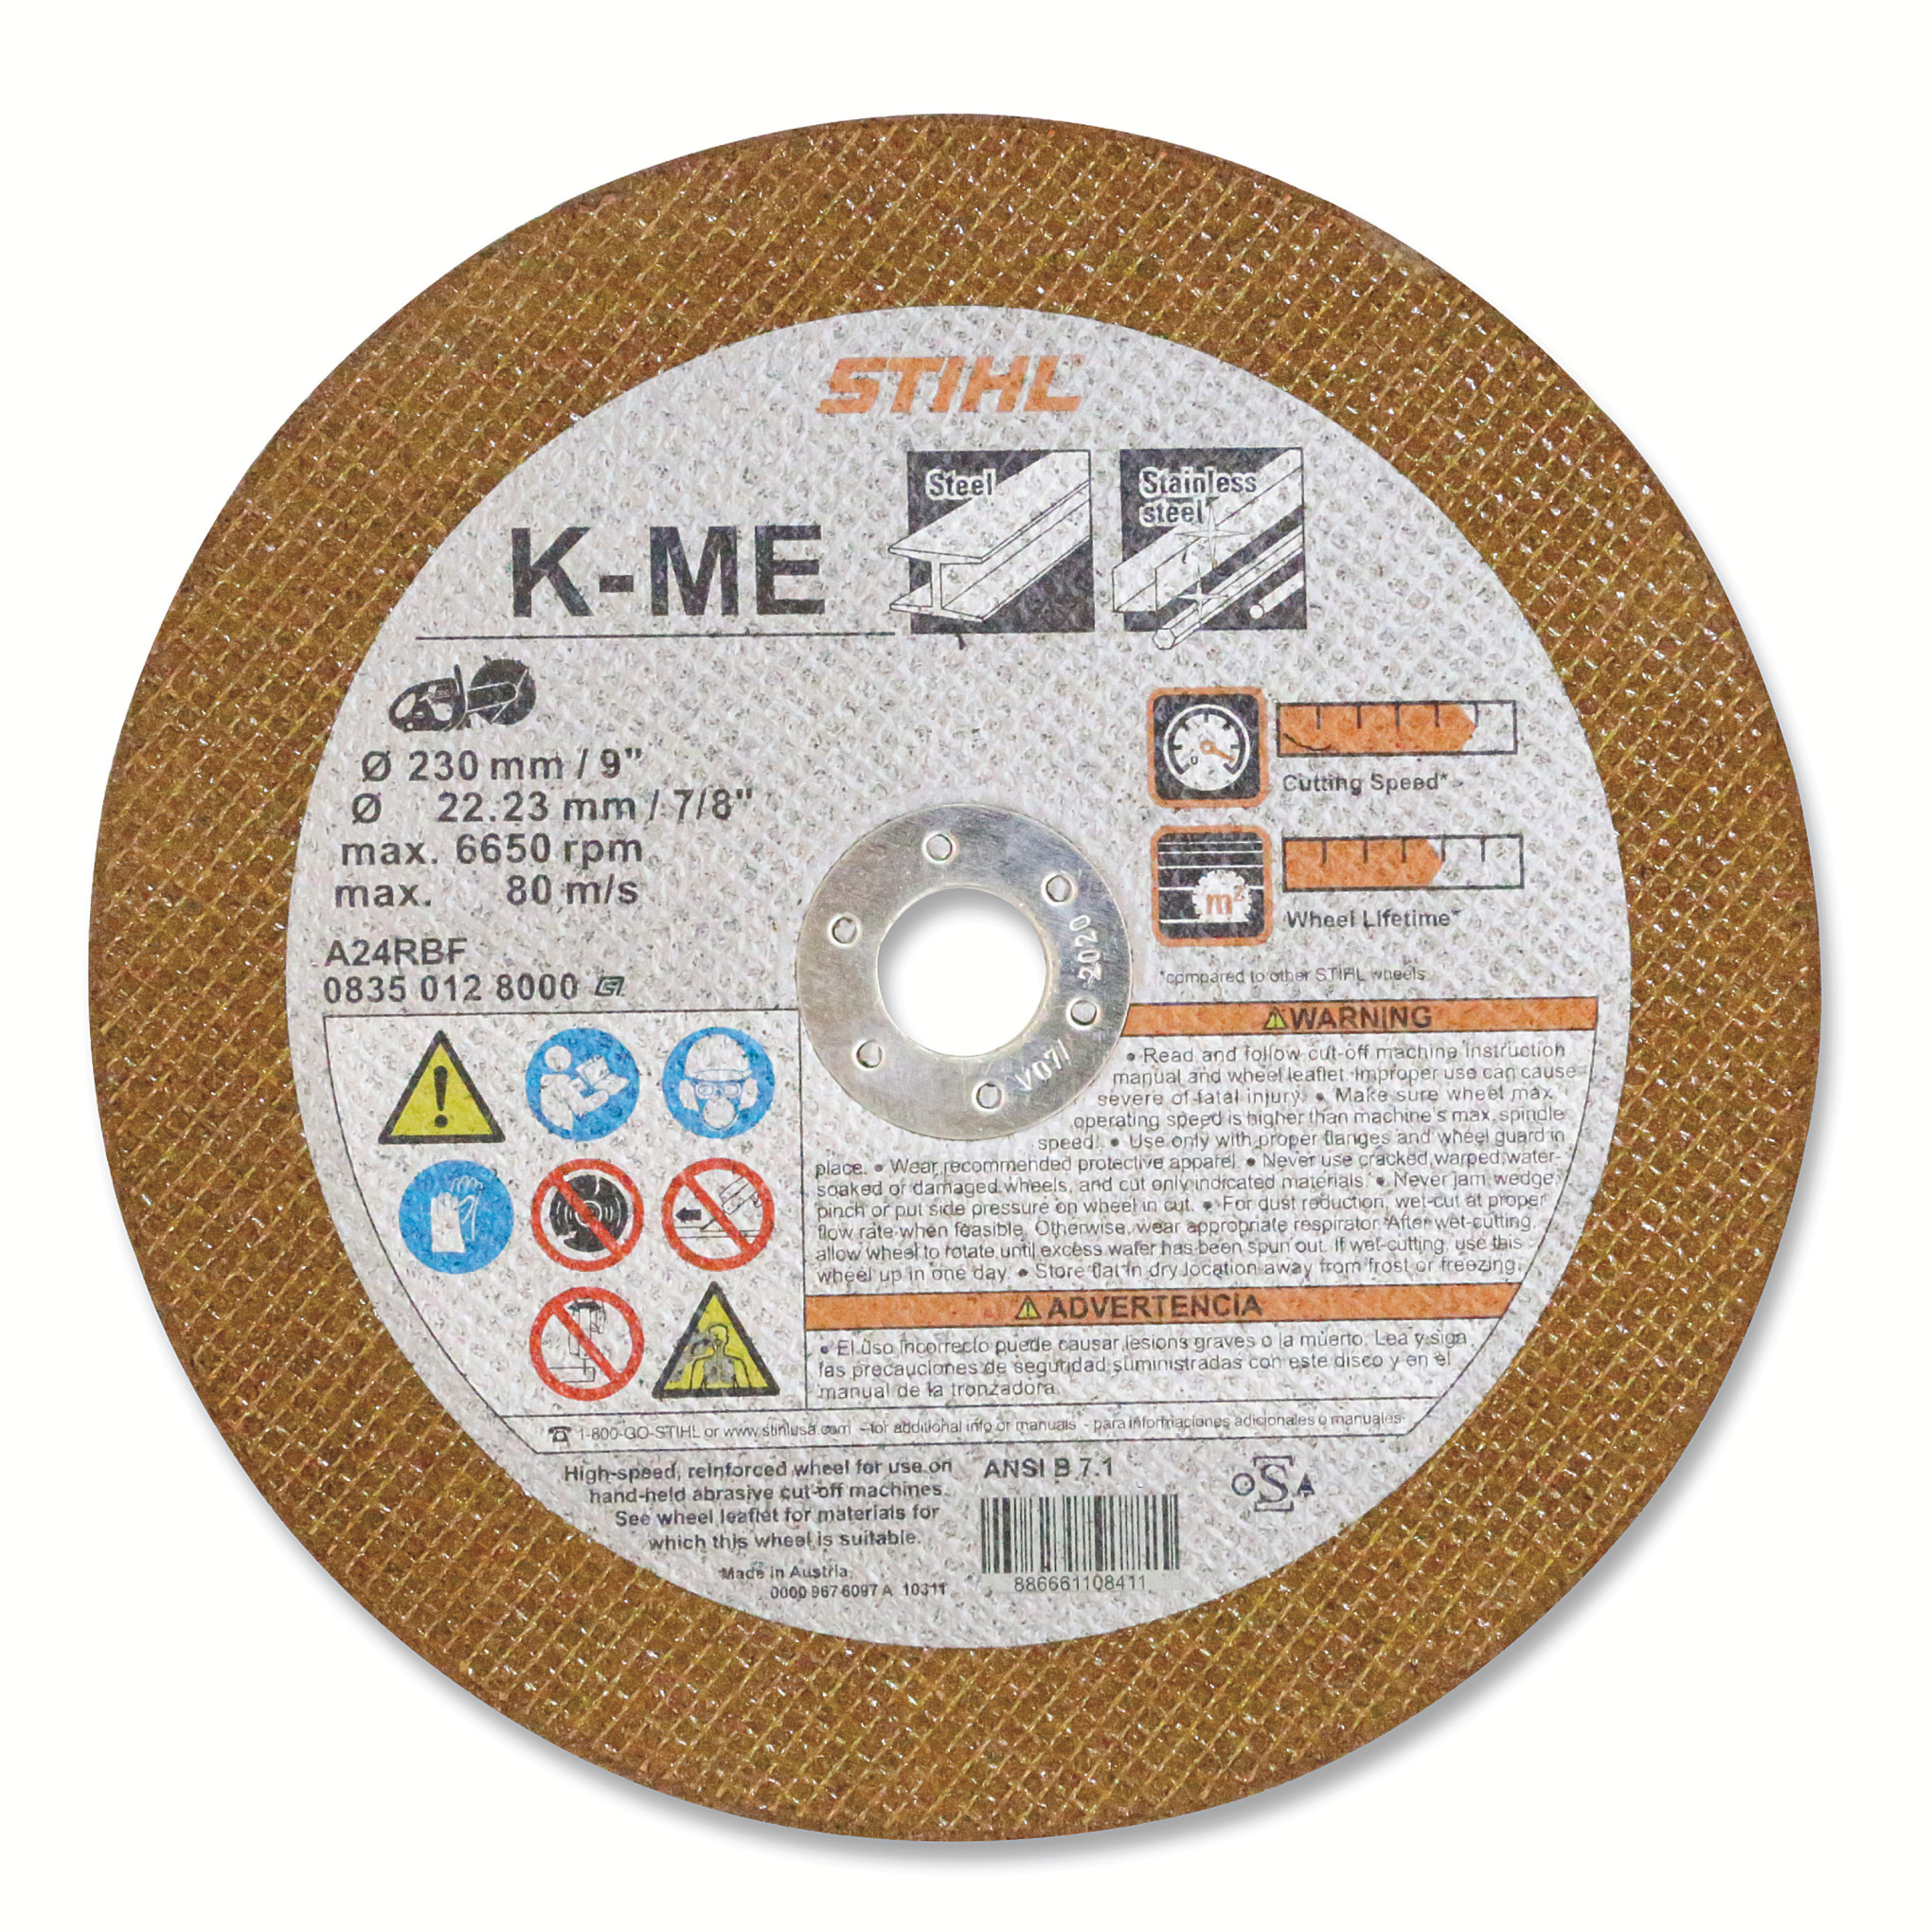 K-ME abrasive cutting wheel - Steel - 9"